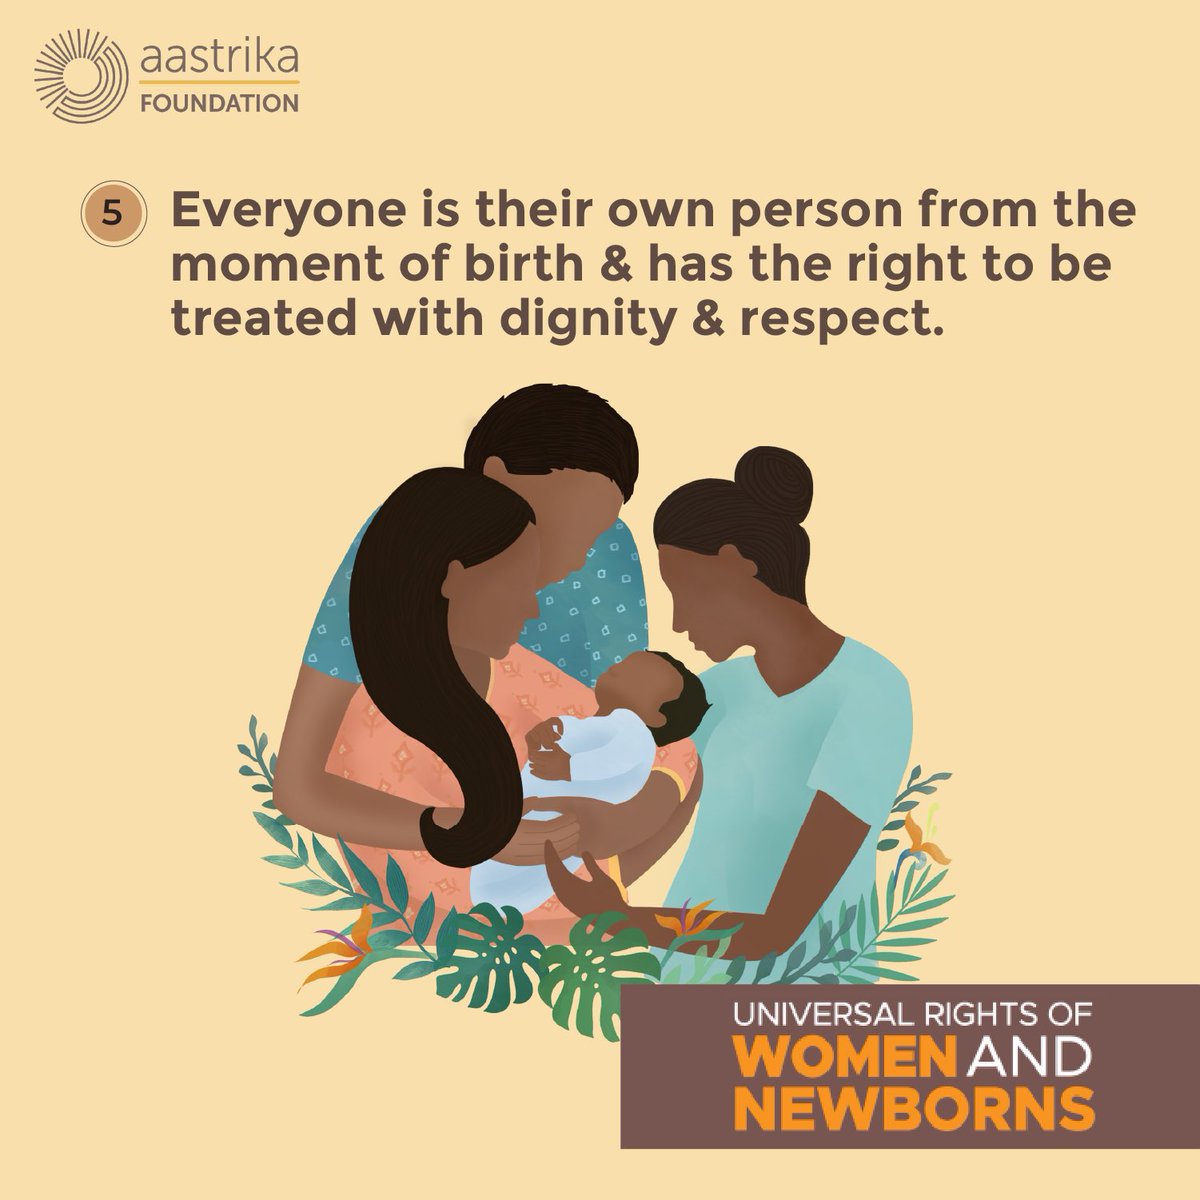 A new life, a sacred bond — the hallmark of maternal care.